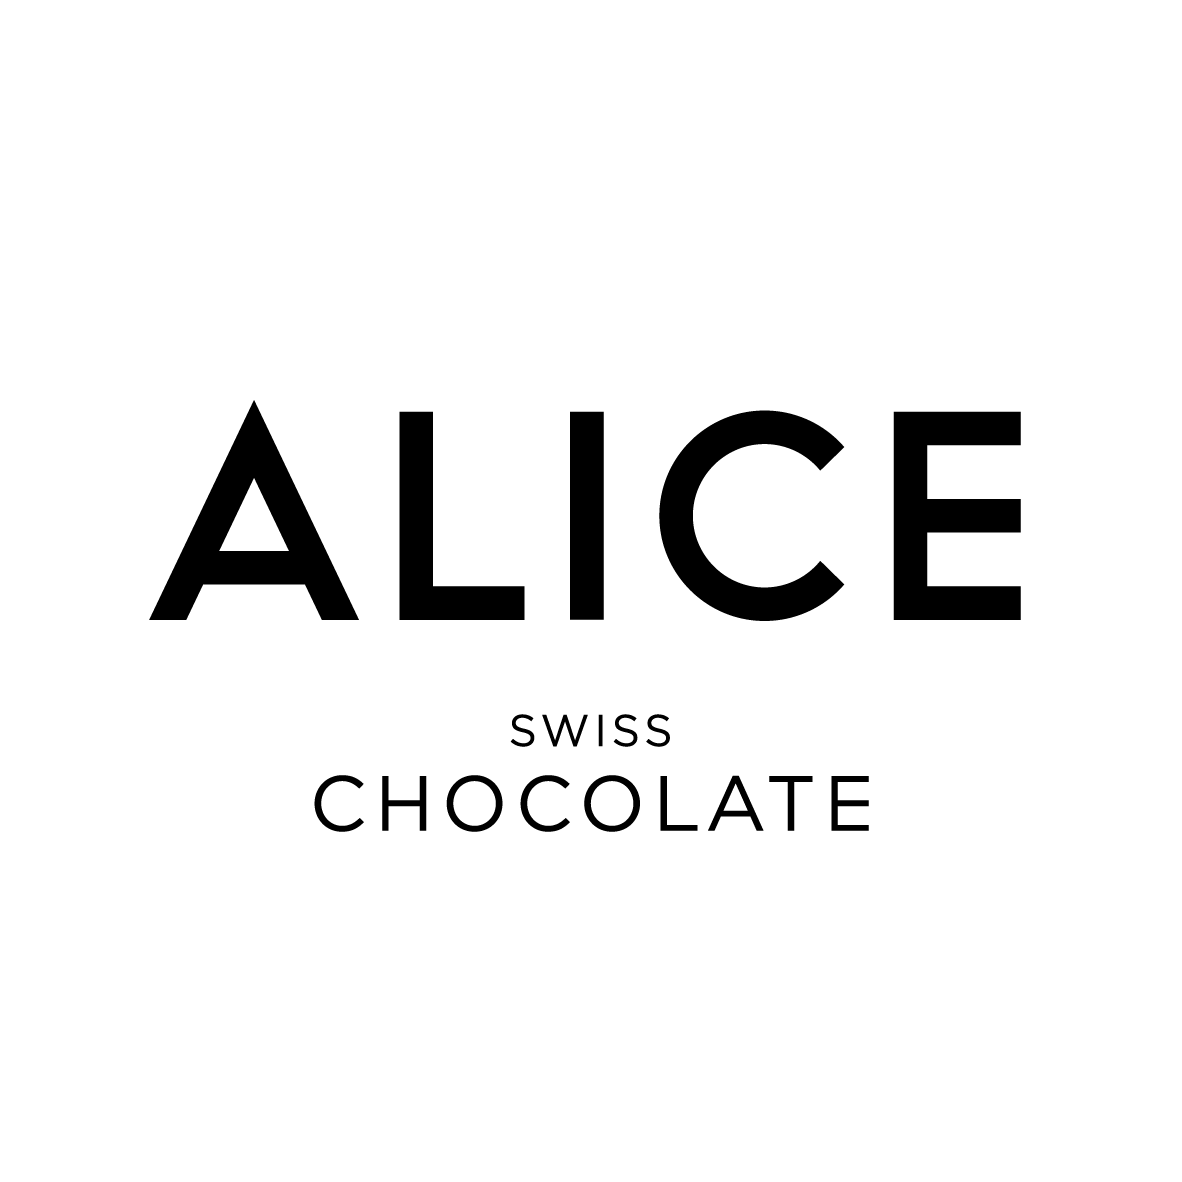 ALICE SWISS CHOCOLATE